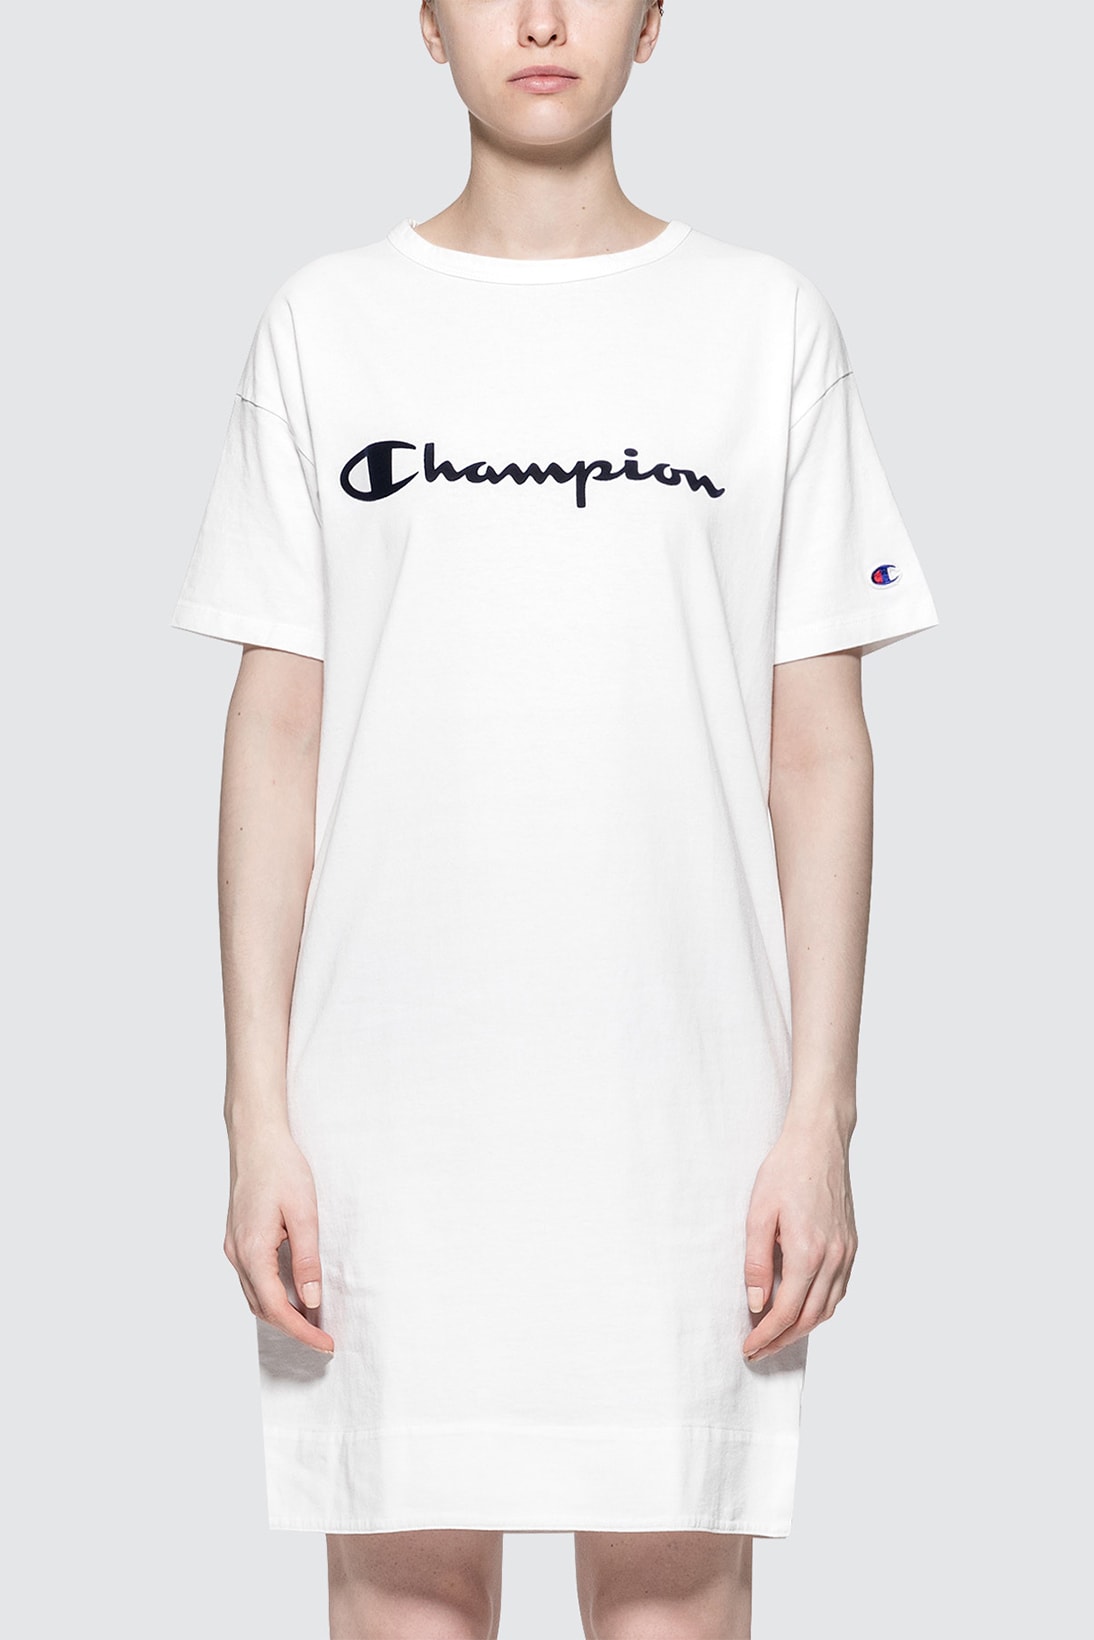 naturlig sympati Farmakologi Where to Buy a Champion Japan Logo T-Shirt Dress | Hypebae